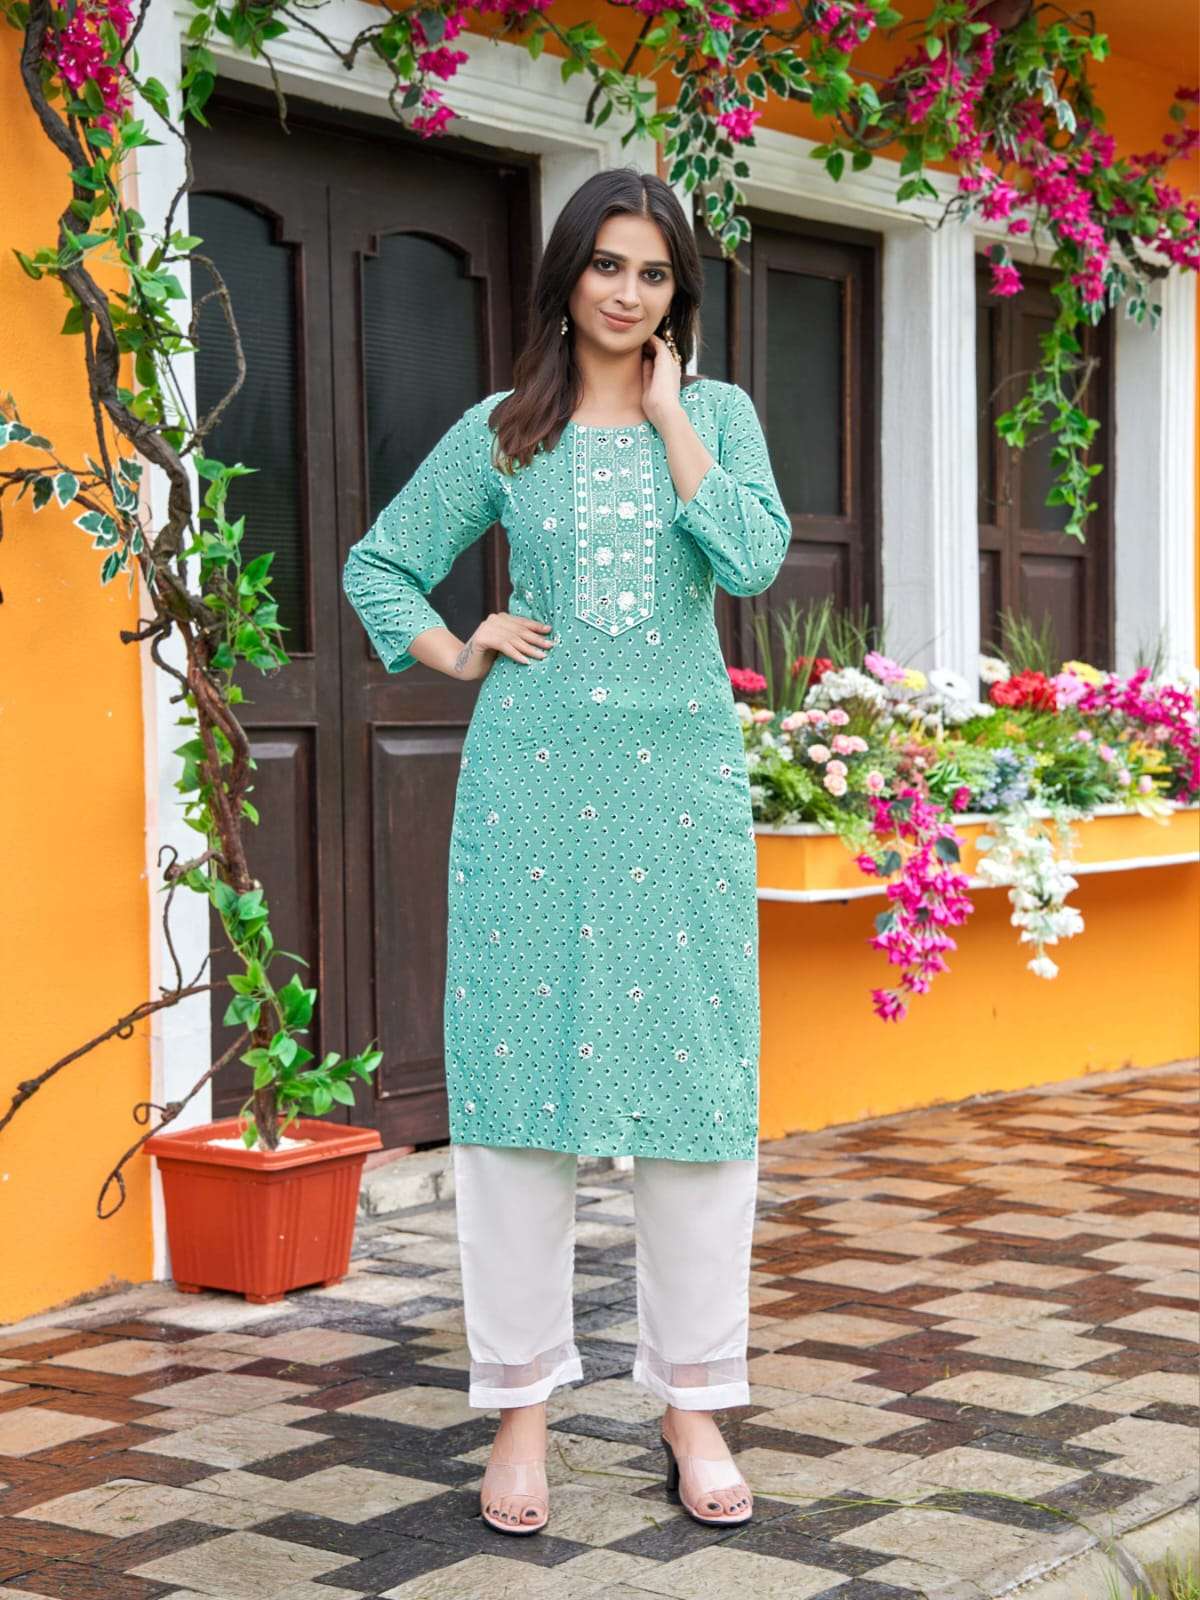 tips and tops satrangi vol-3 trendy designer kurti with pant catalogue online supplier surat 